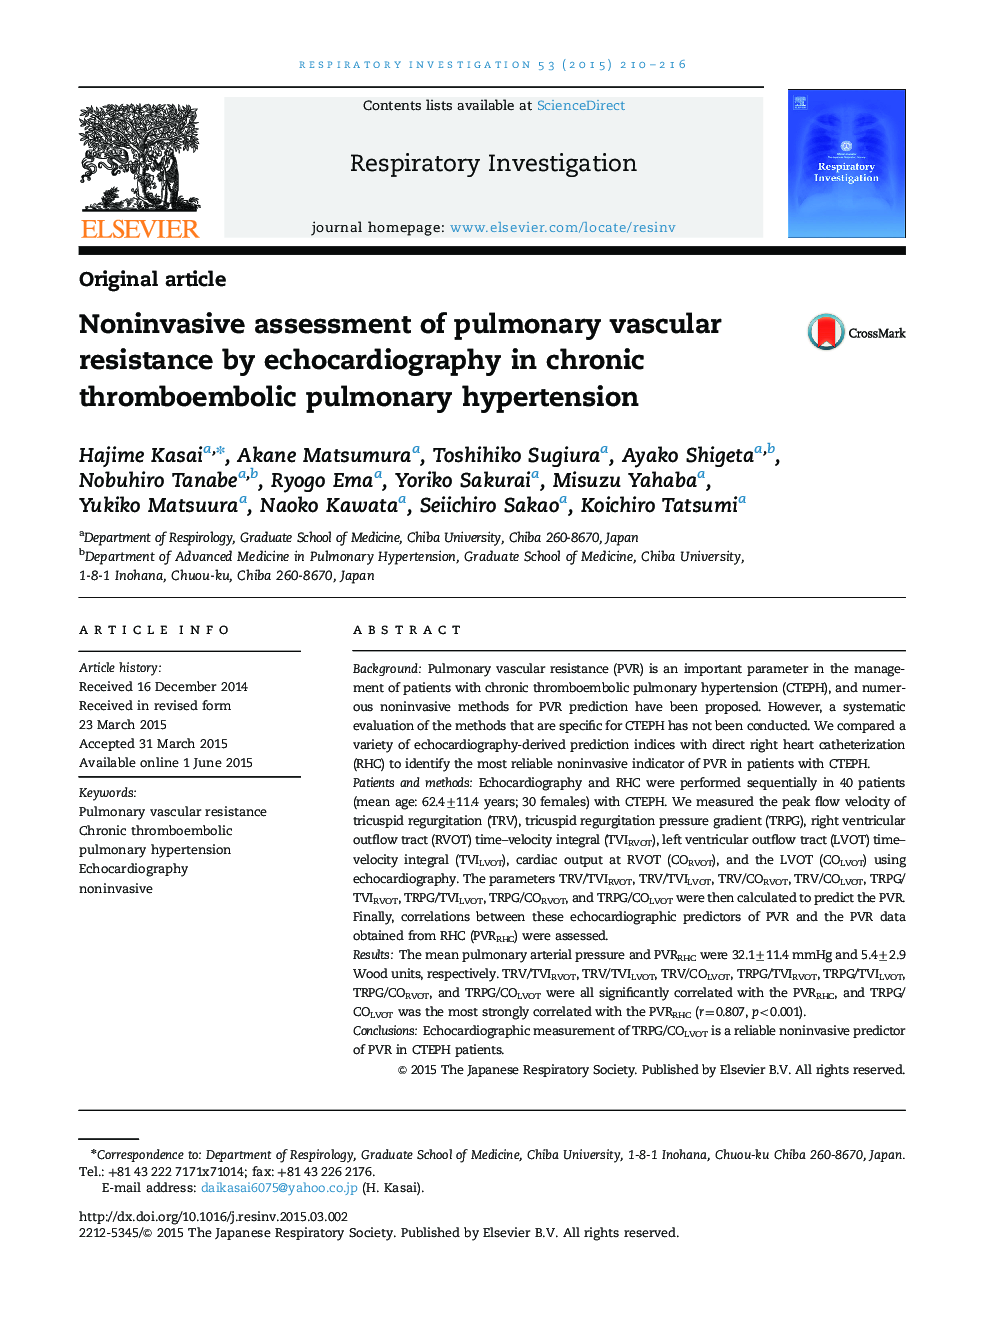 Noninvasive assessment of pulmonary vascular resistance by echocardiography in chronic thromboembolic pulmonary hypertension